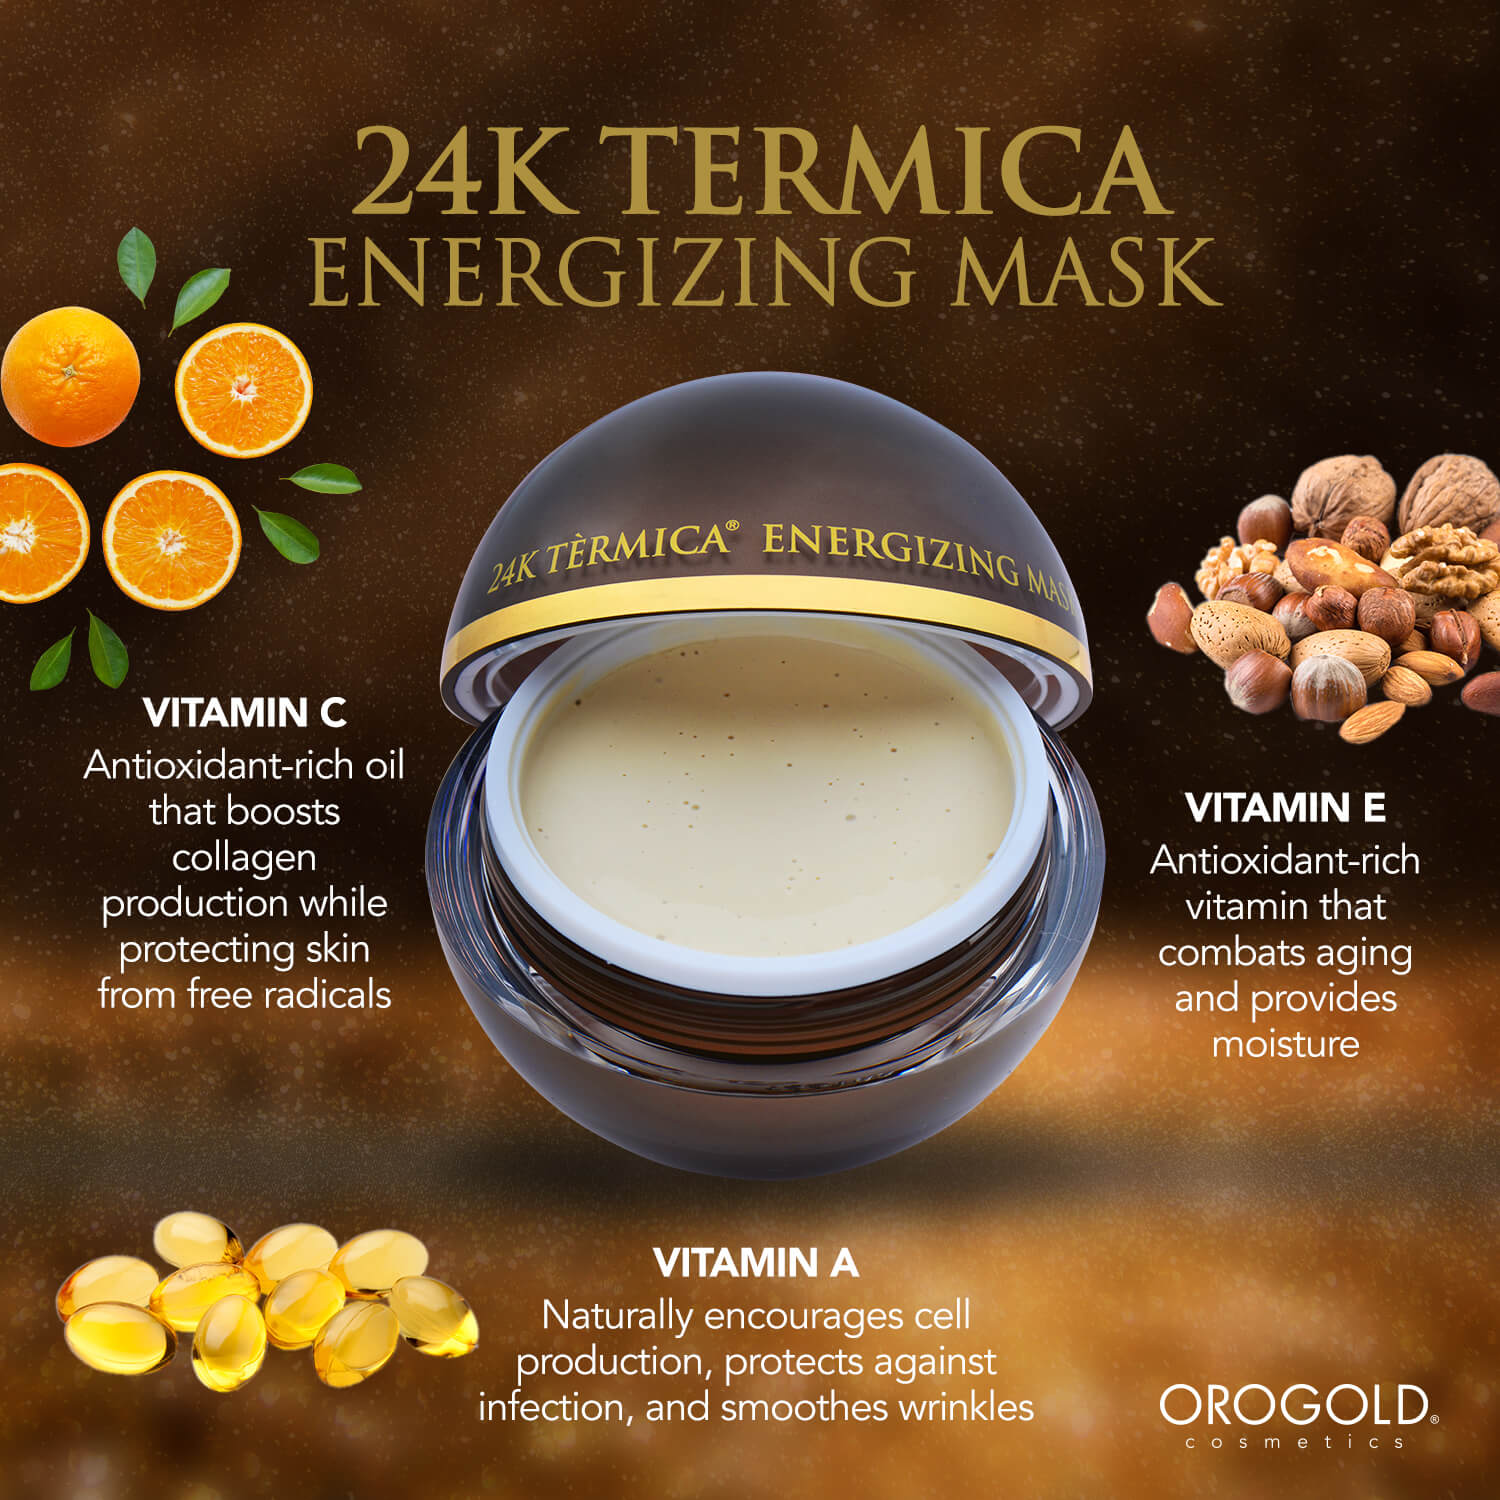 termica energizing mask